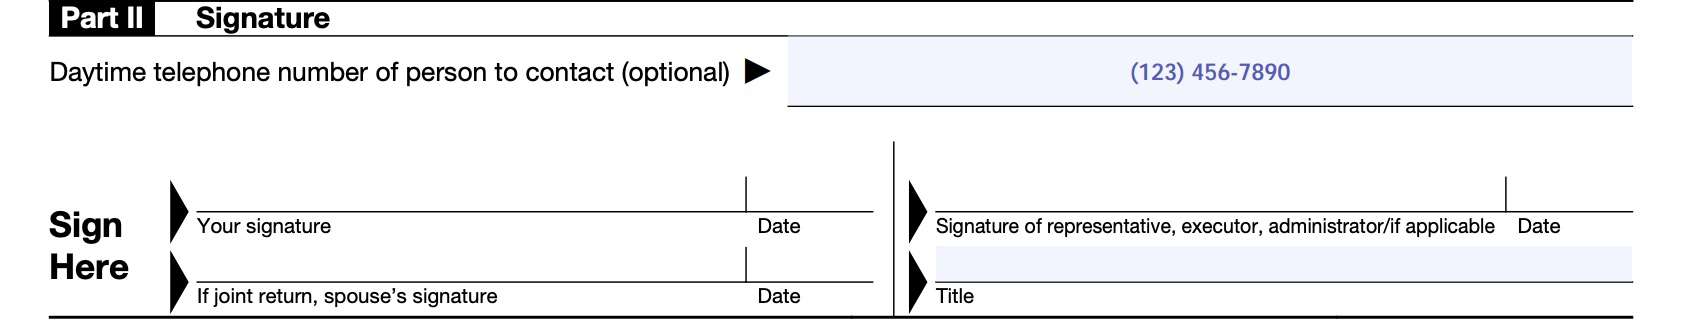 irs form 8822, part ii: signature